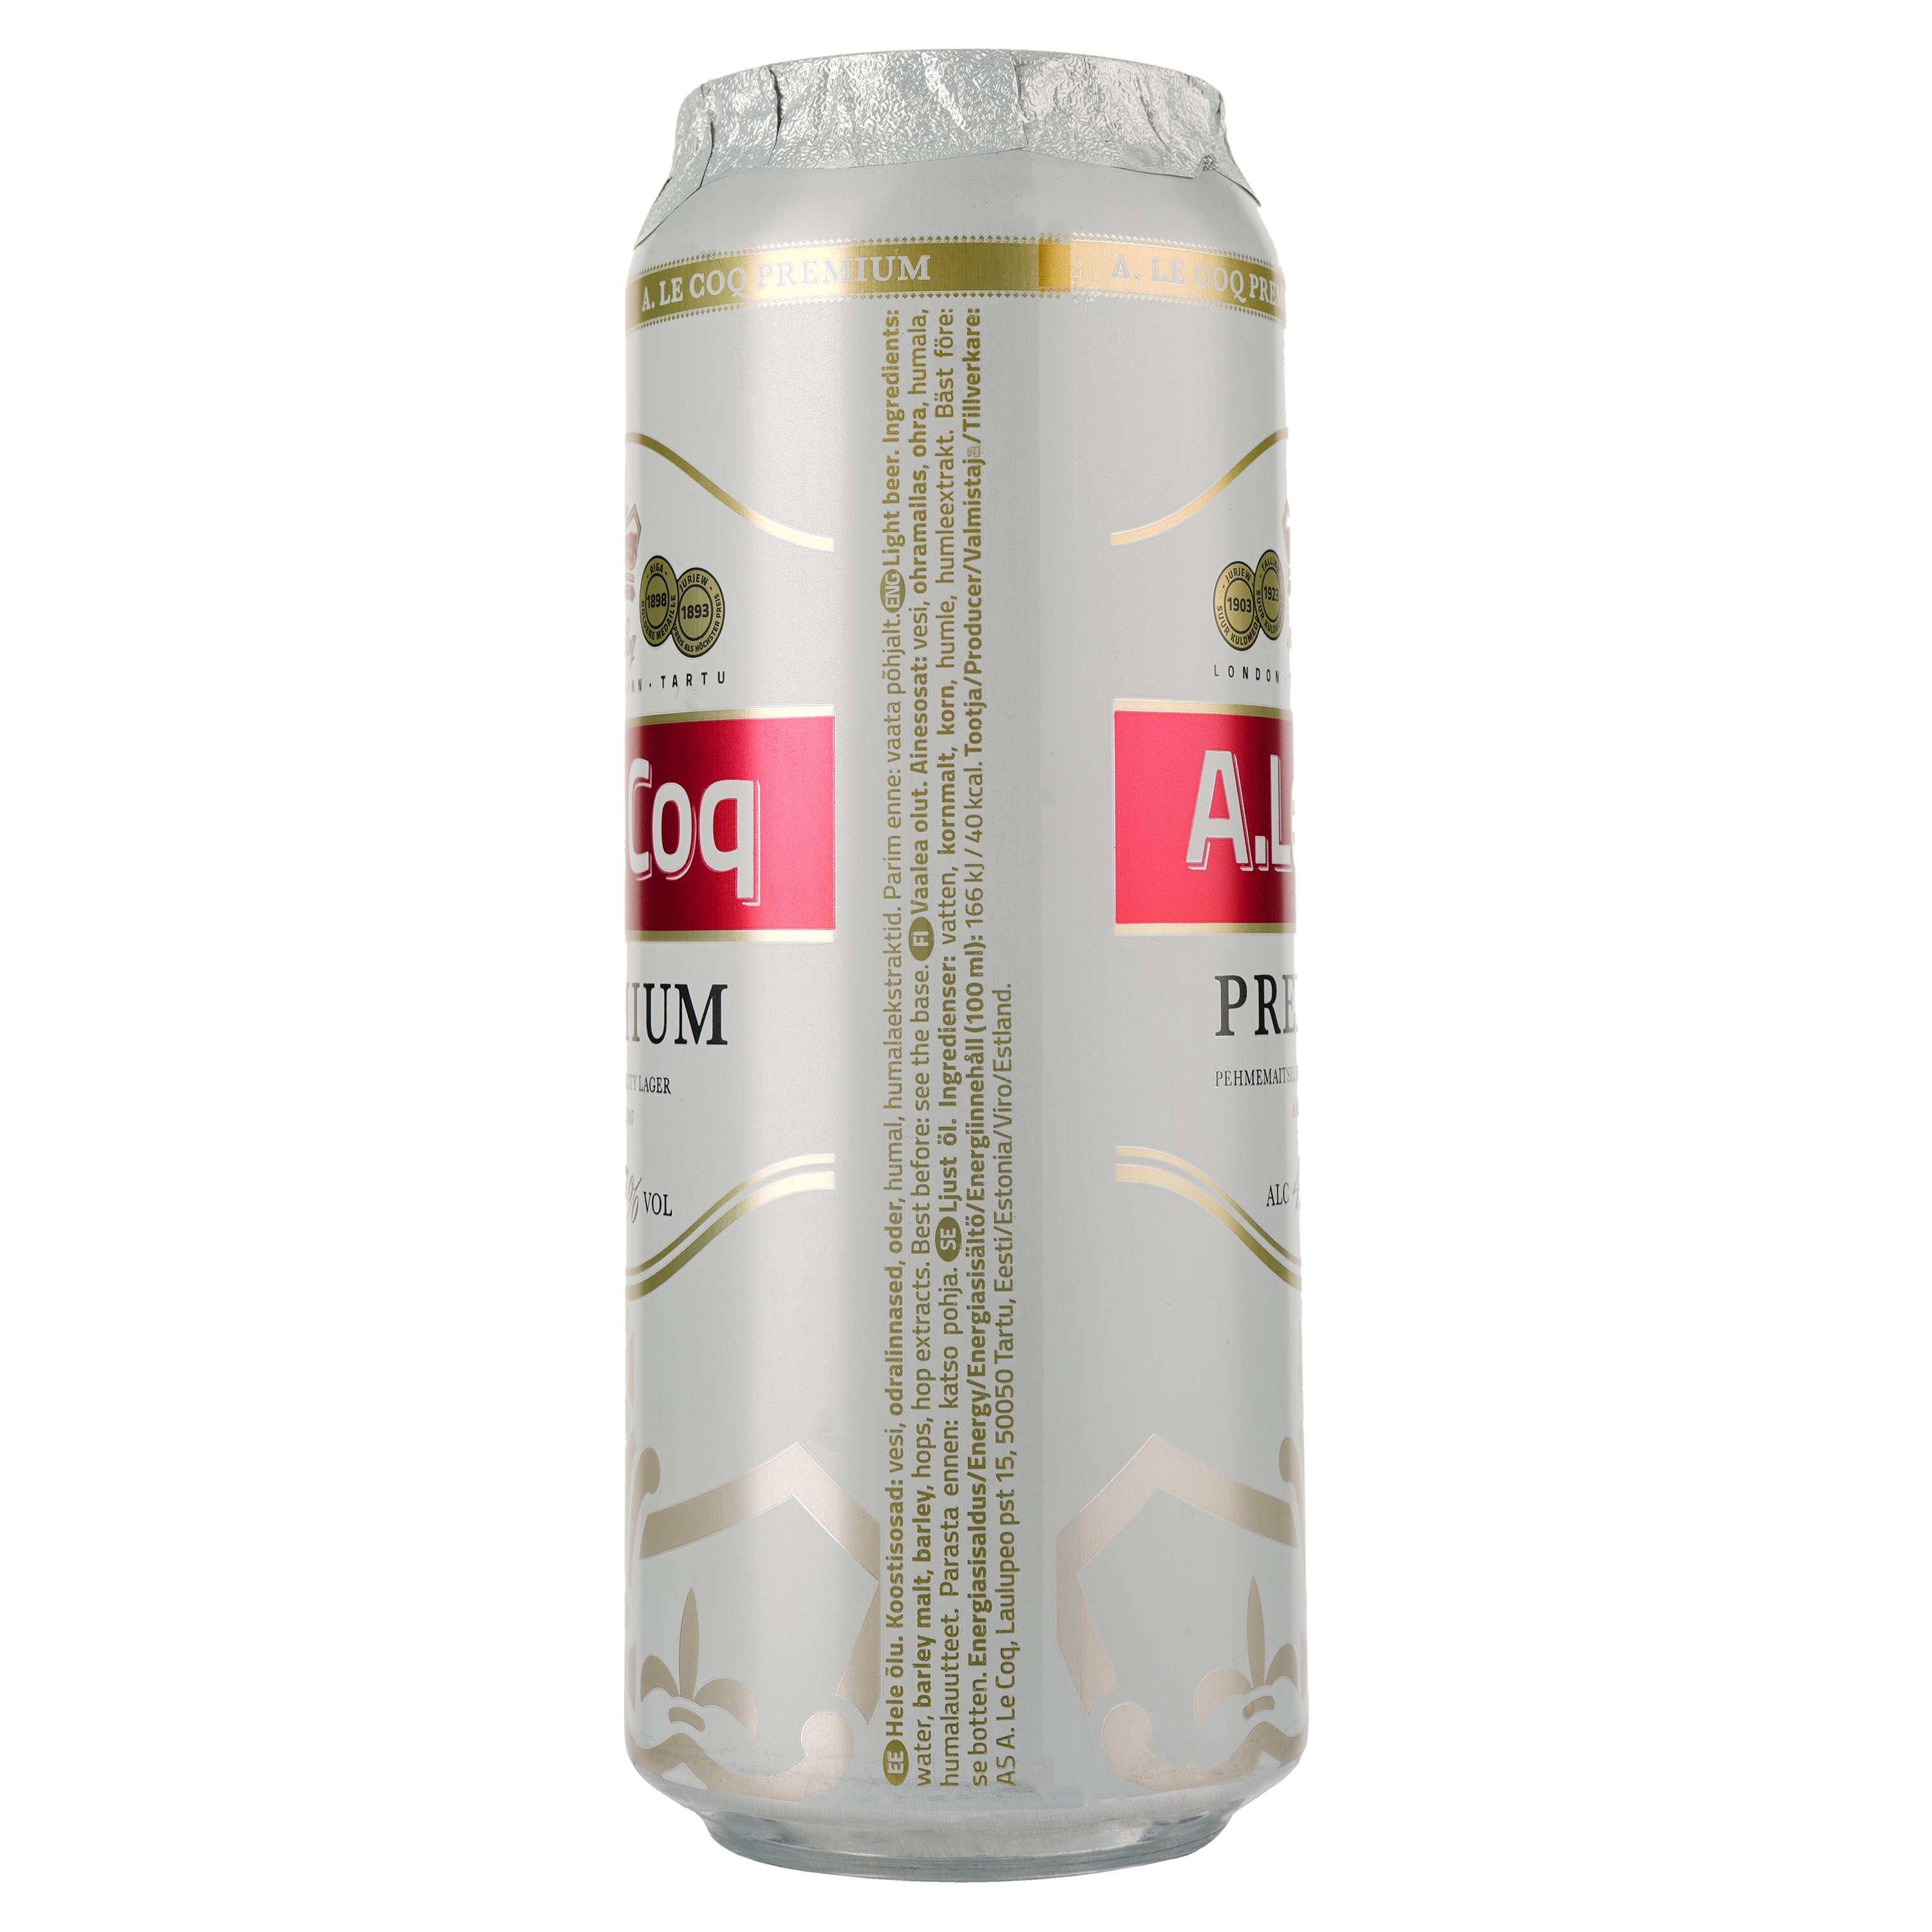 Пиво A. Le Coq Premium, светлое, фильтрованное, 4,7%, ж/б, 0,5 л - фото 2